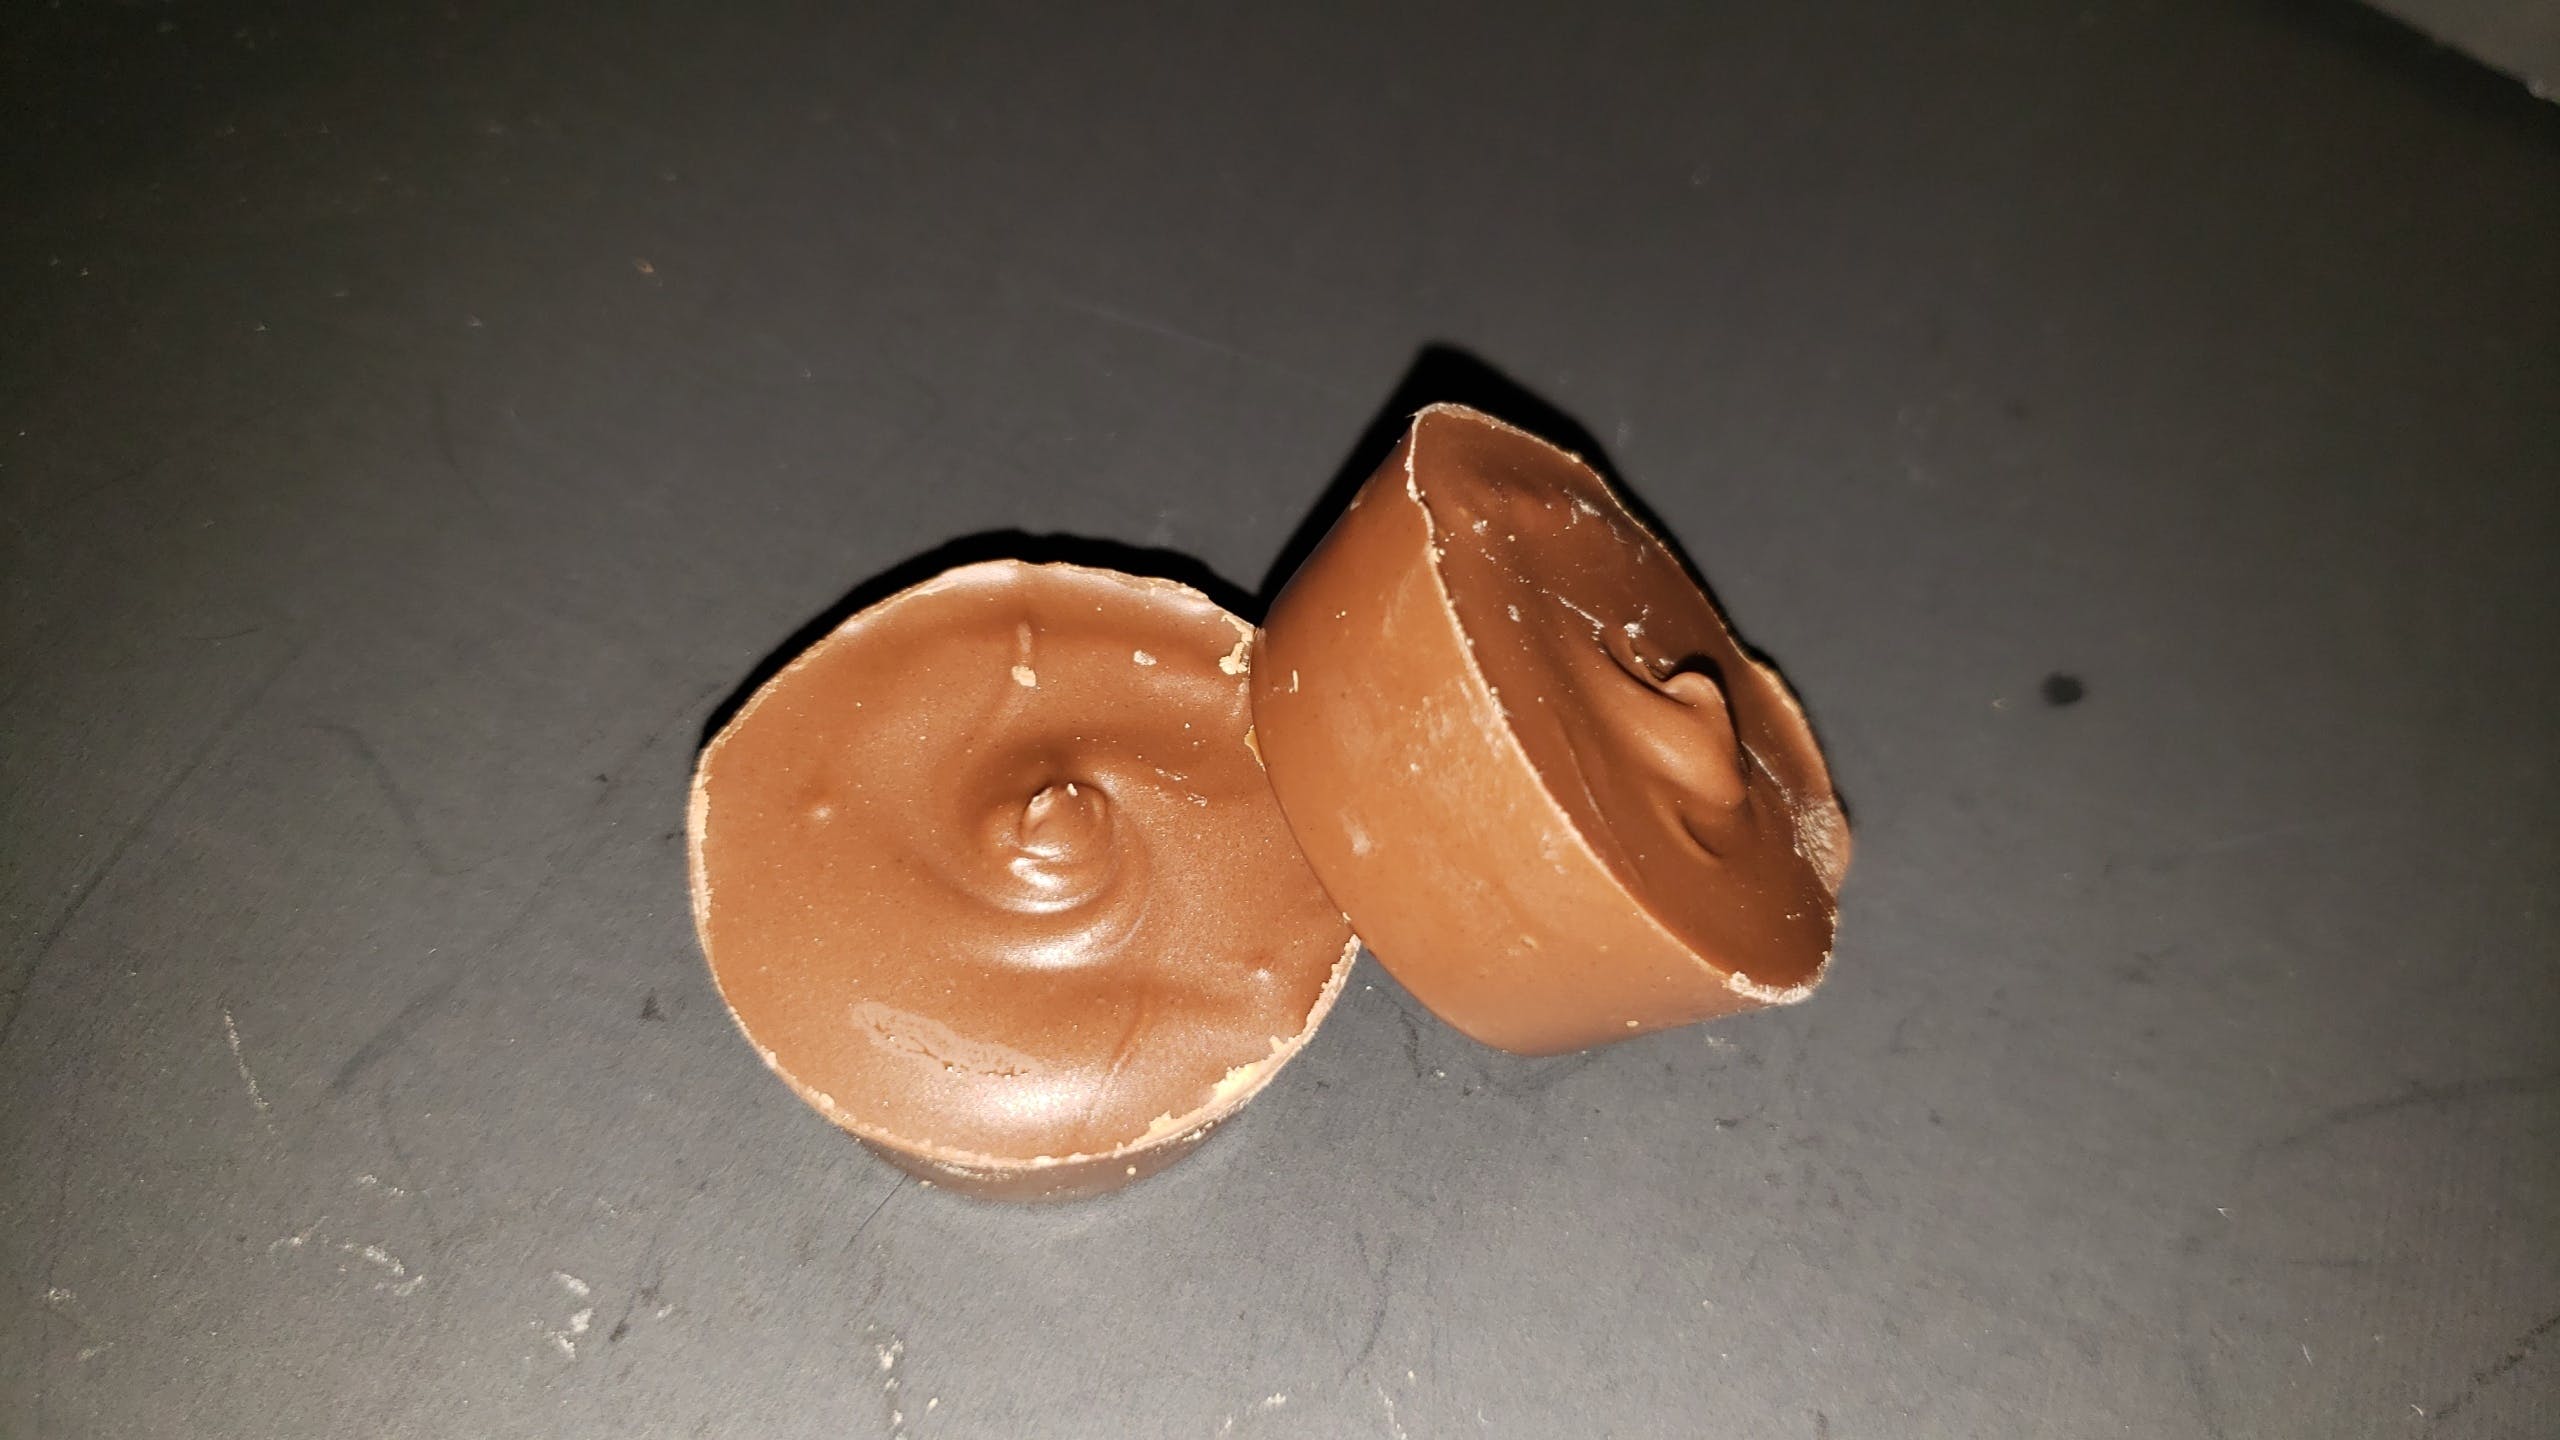 edible-chocolate-peanut-butter-mini-cups-40mg-2-pc